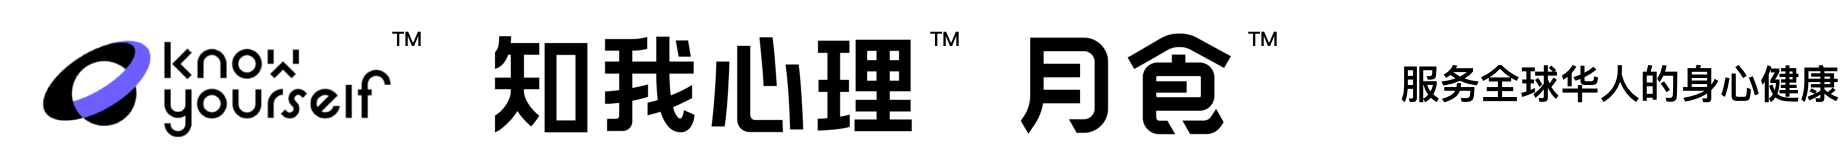 ky-logo